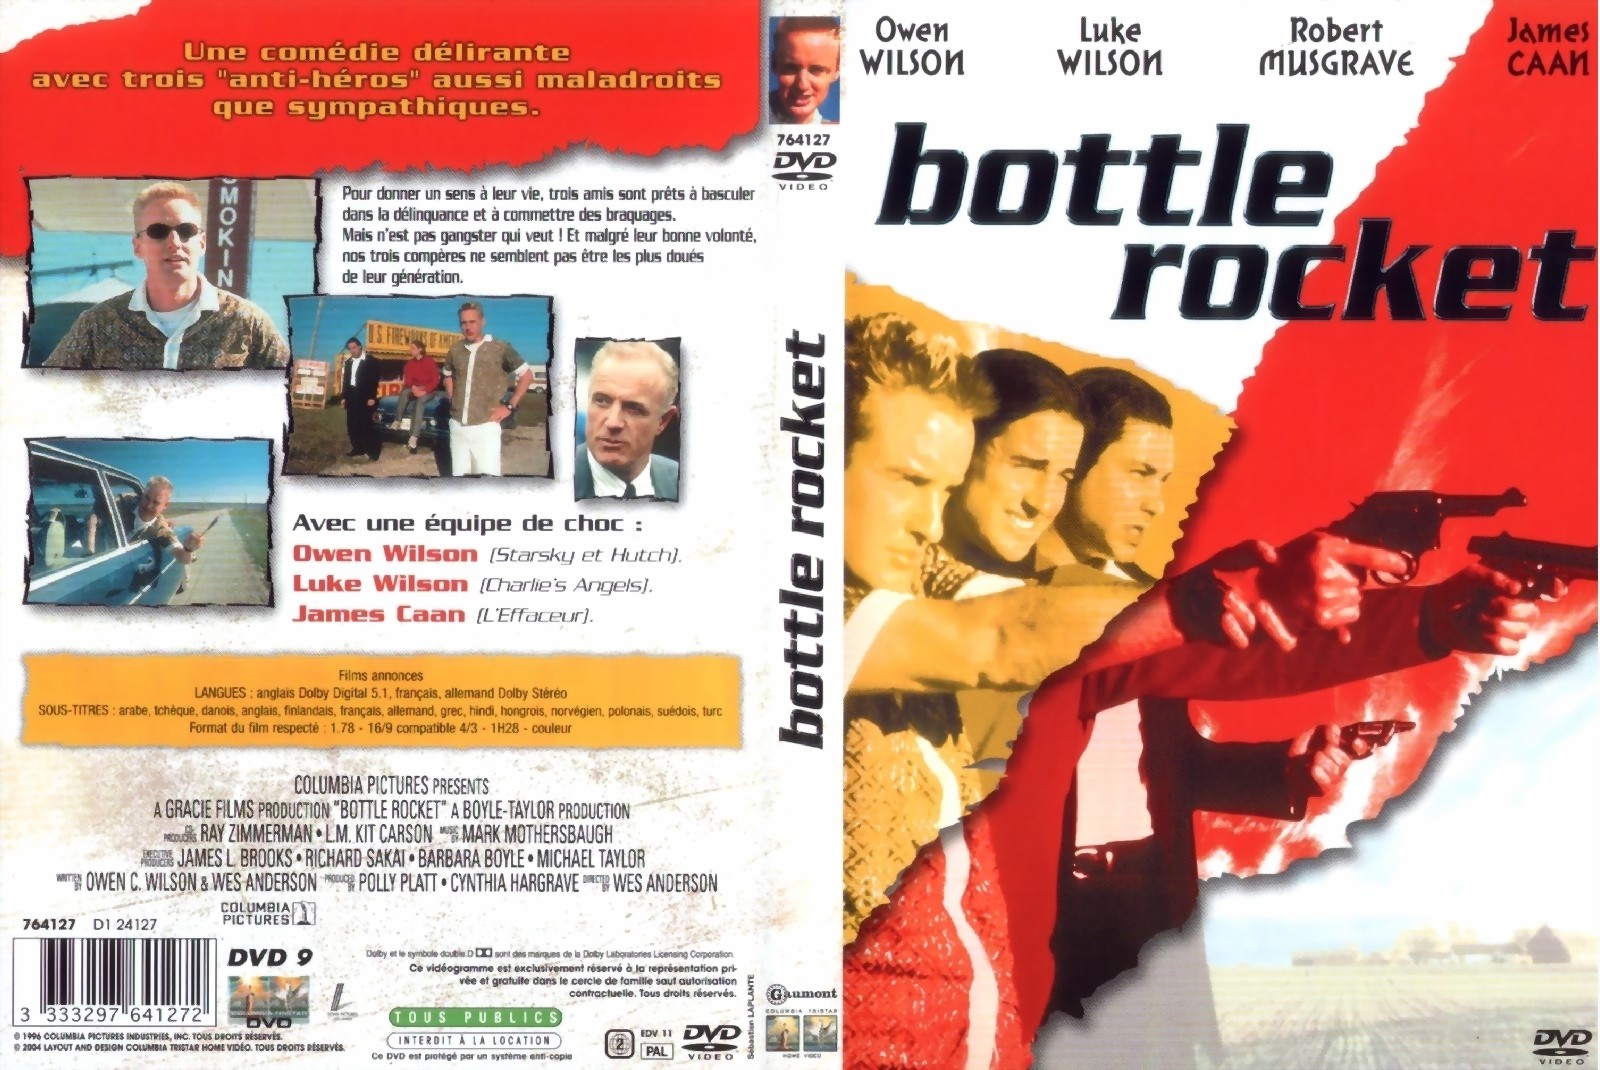 Jaquette DVD Bottle rocket